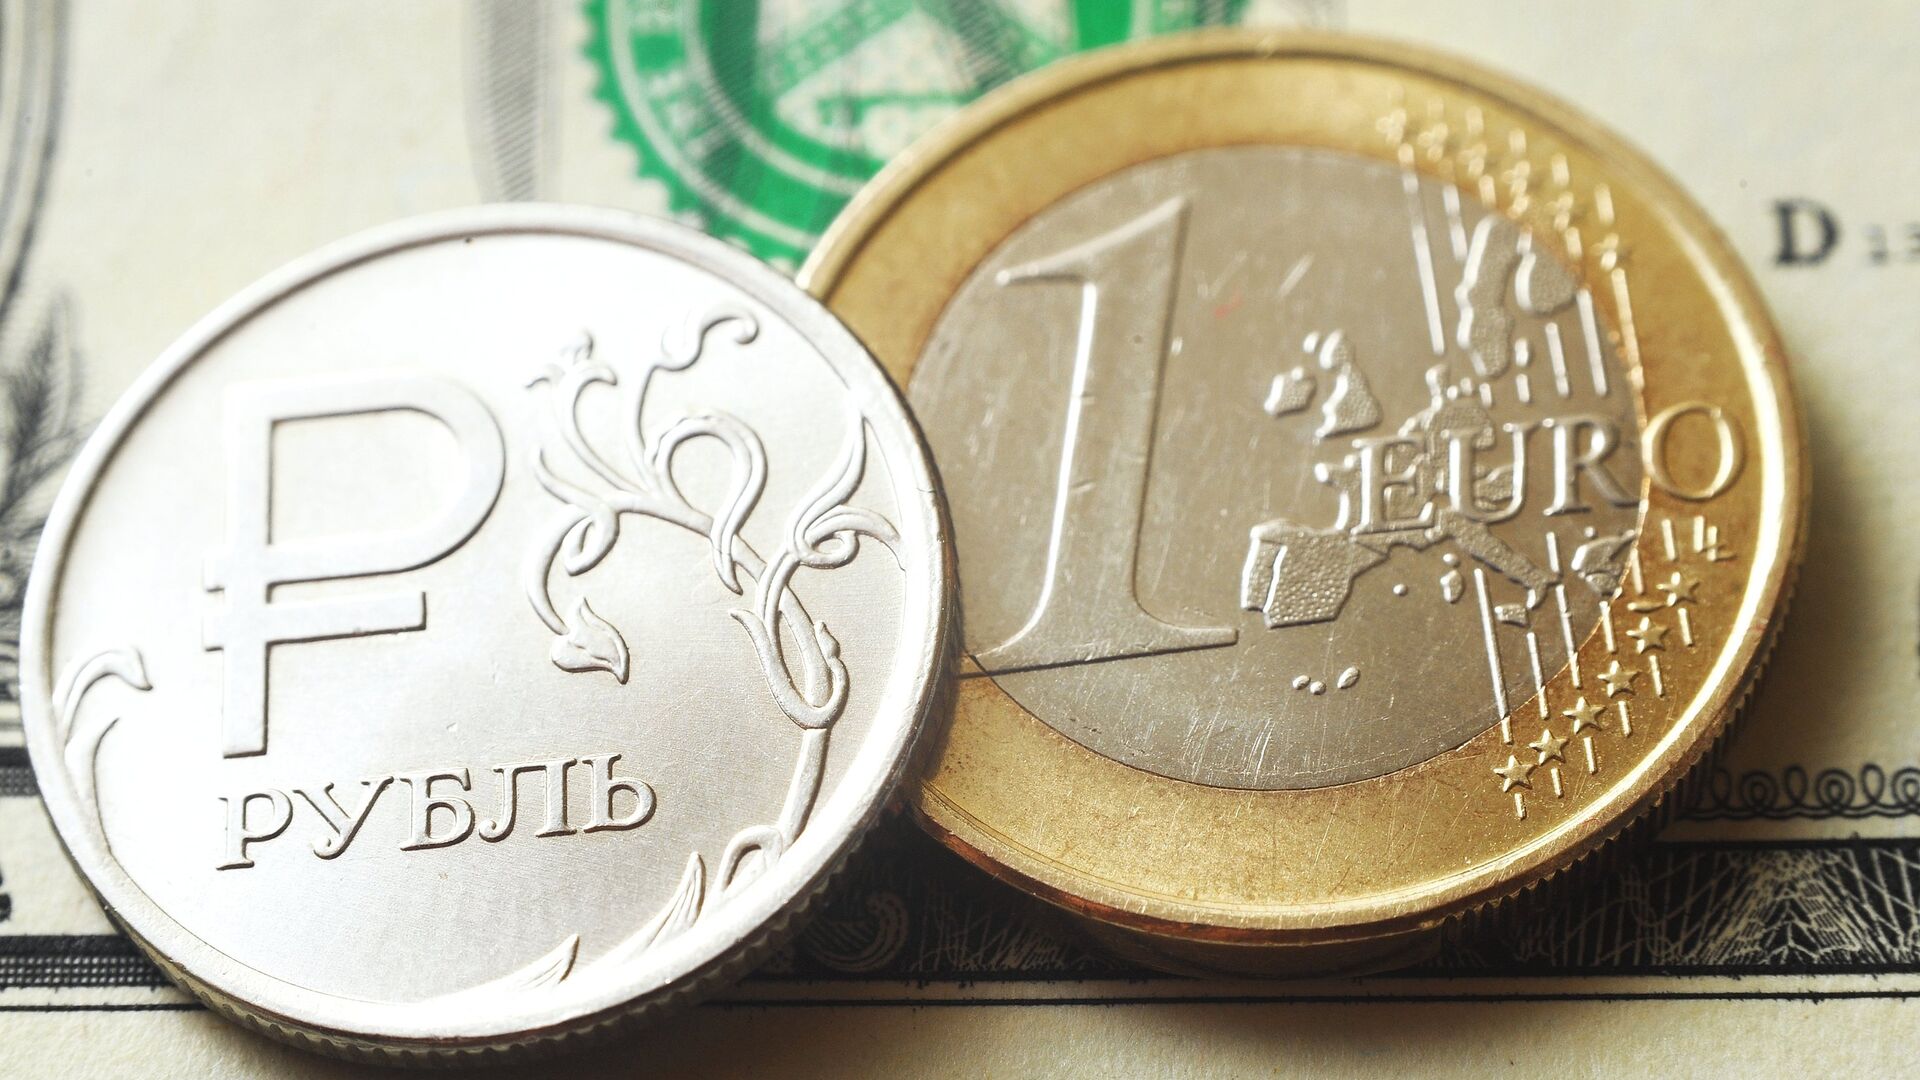 Монеты номиналом один рубль, один евро на банкноте один доллар США - РИА Новости, 1920, 31.10.2020